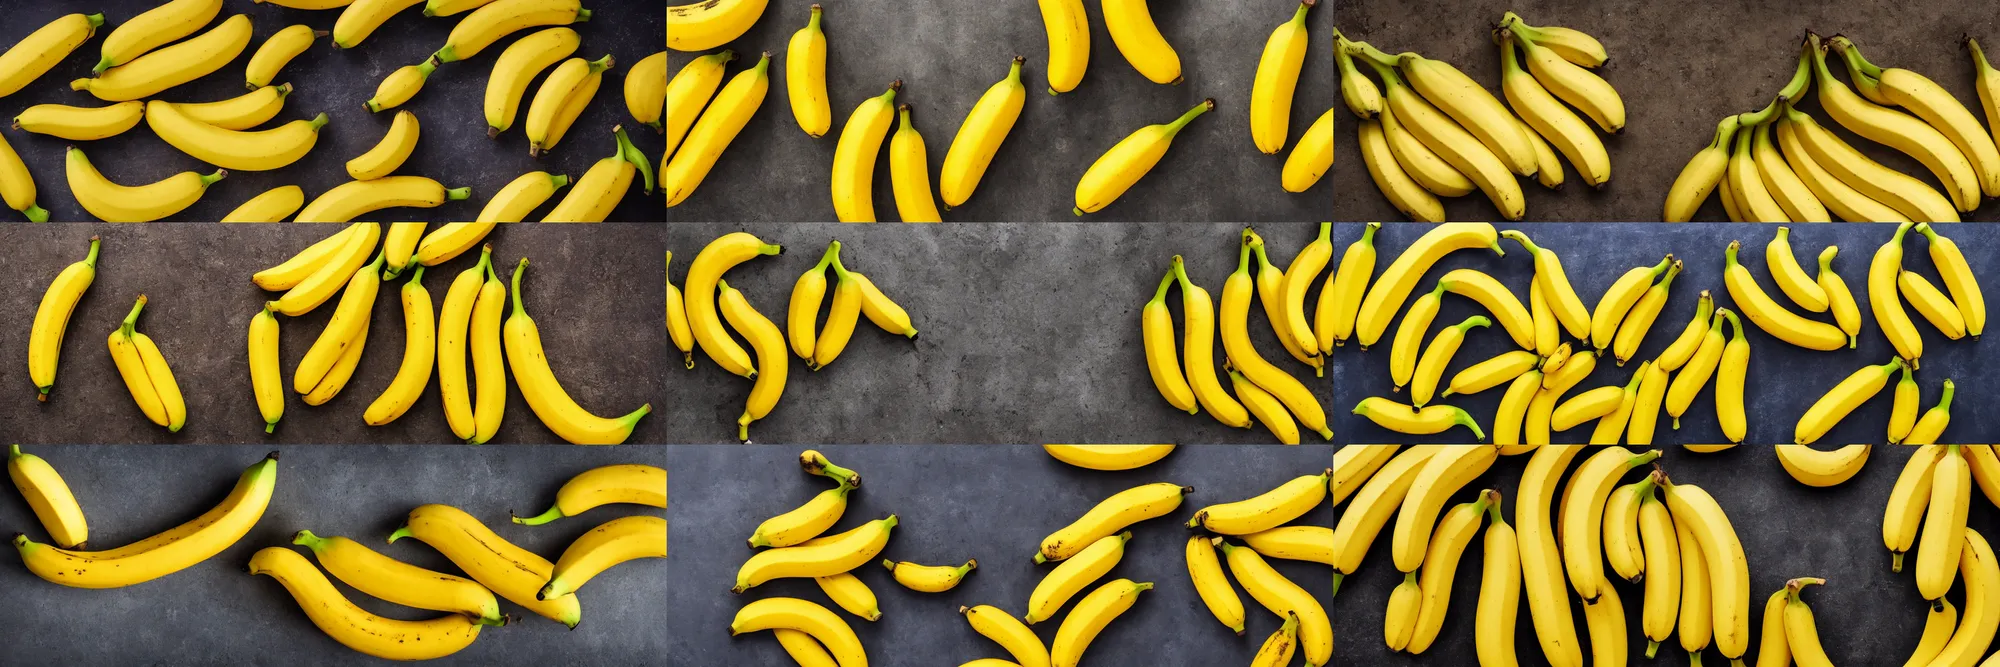 Prompt: fresh grown bright yellow bananas used as gun cartridges